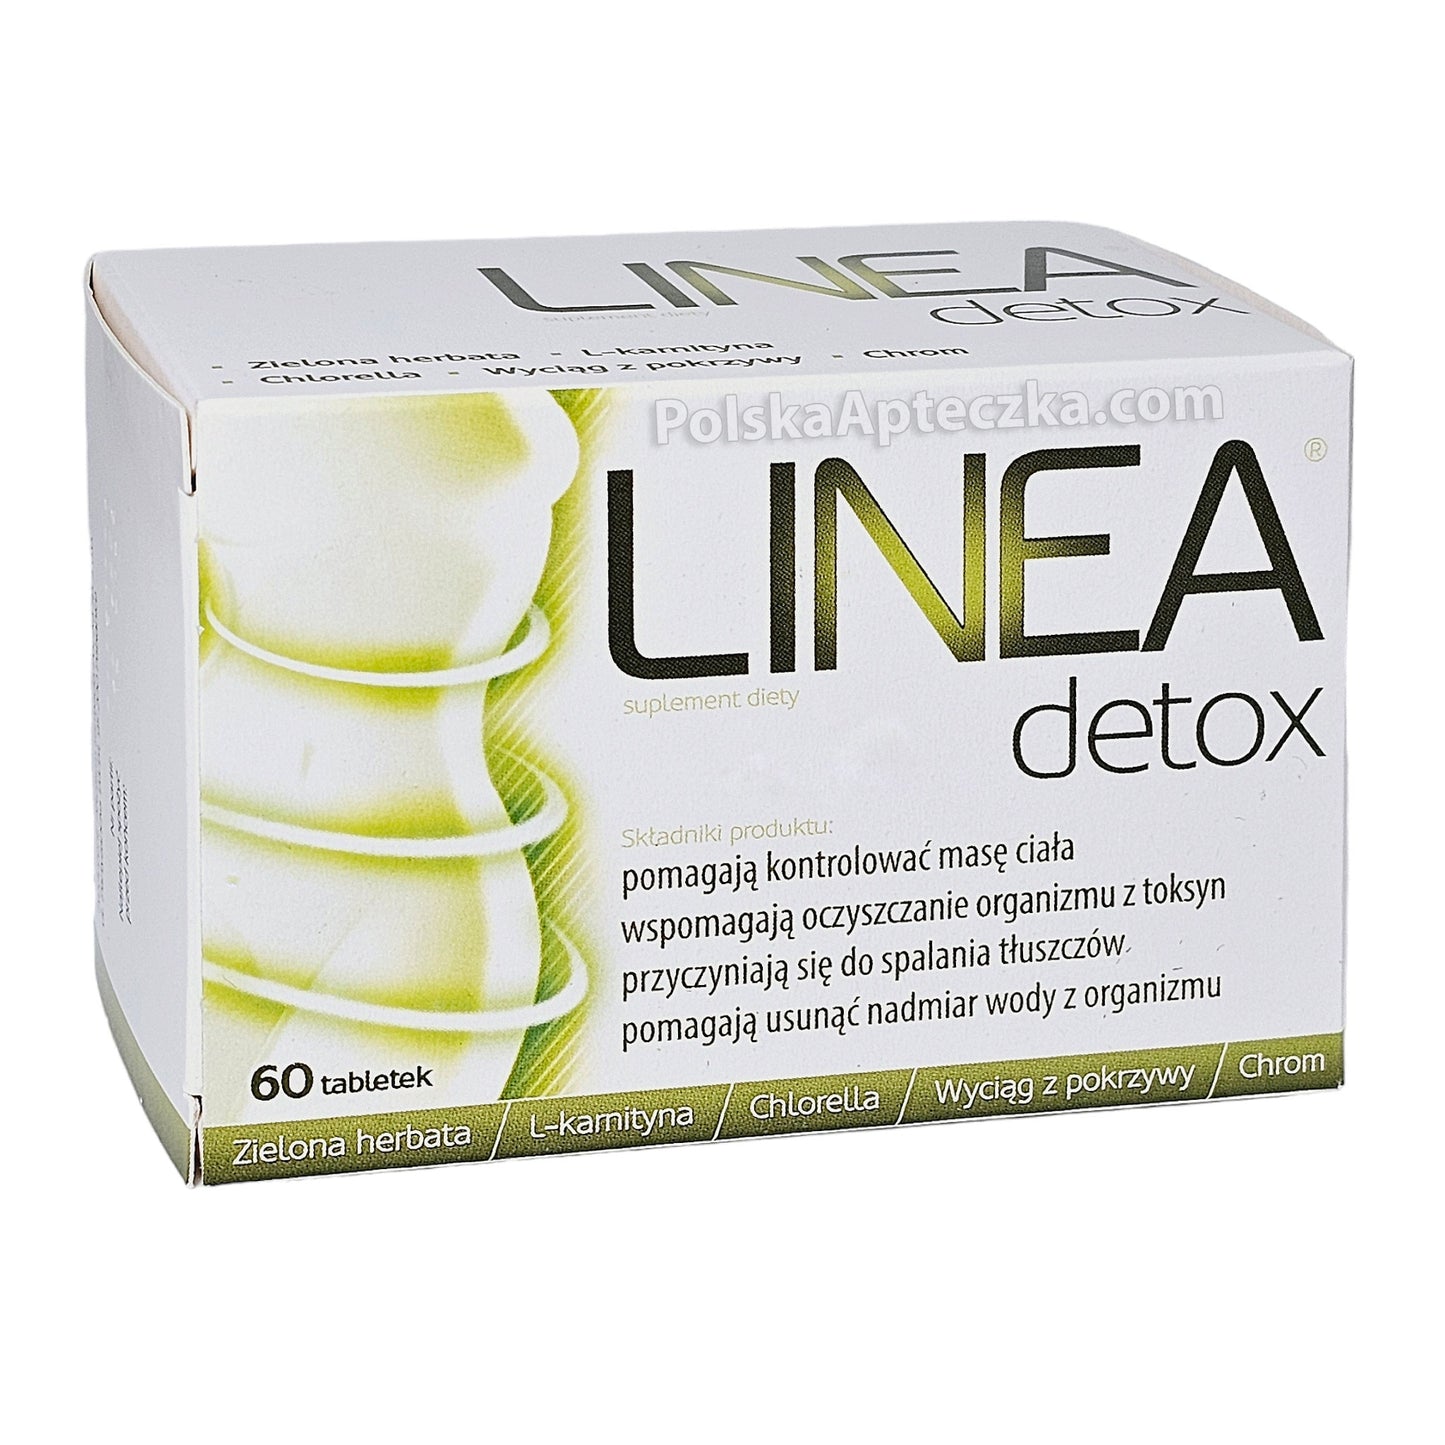 linea detox tablets